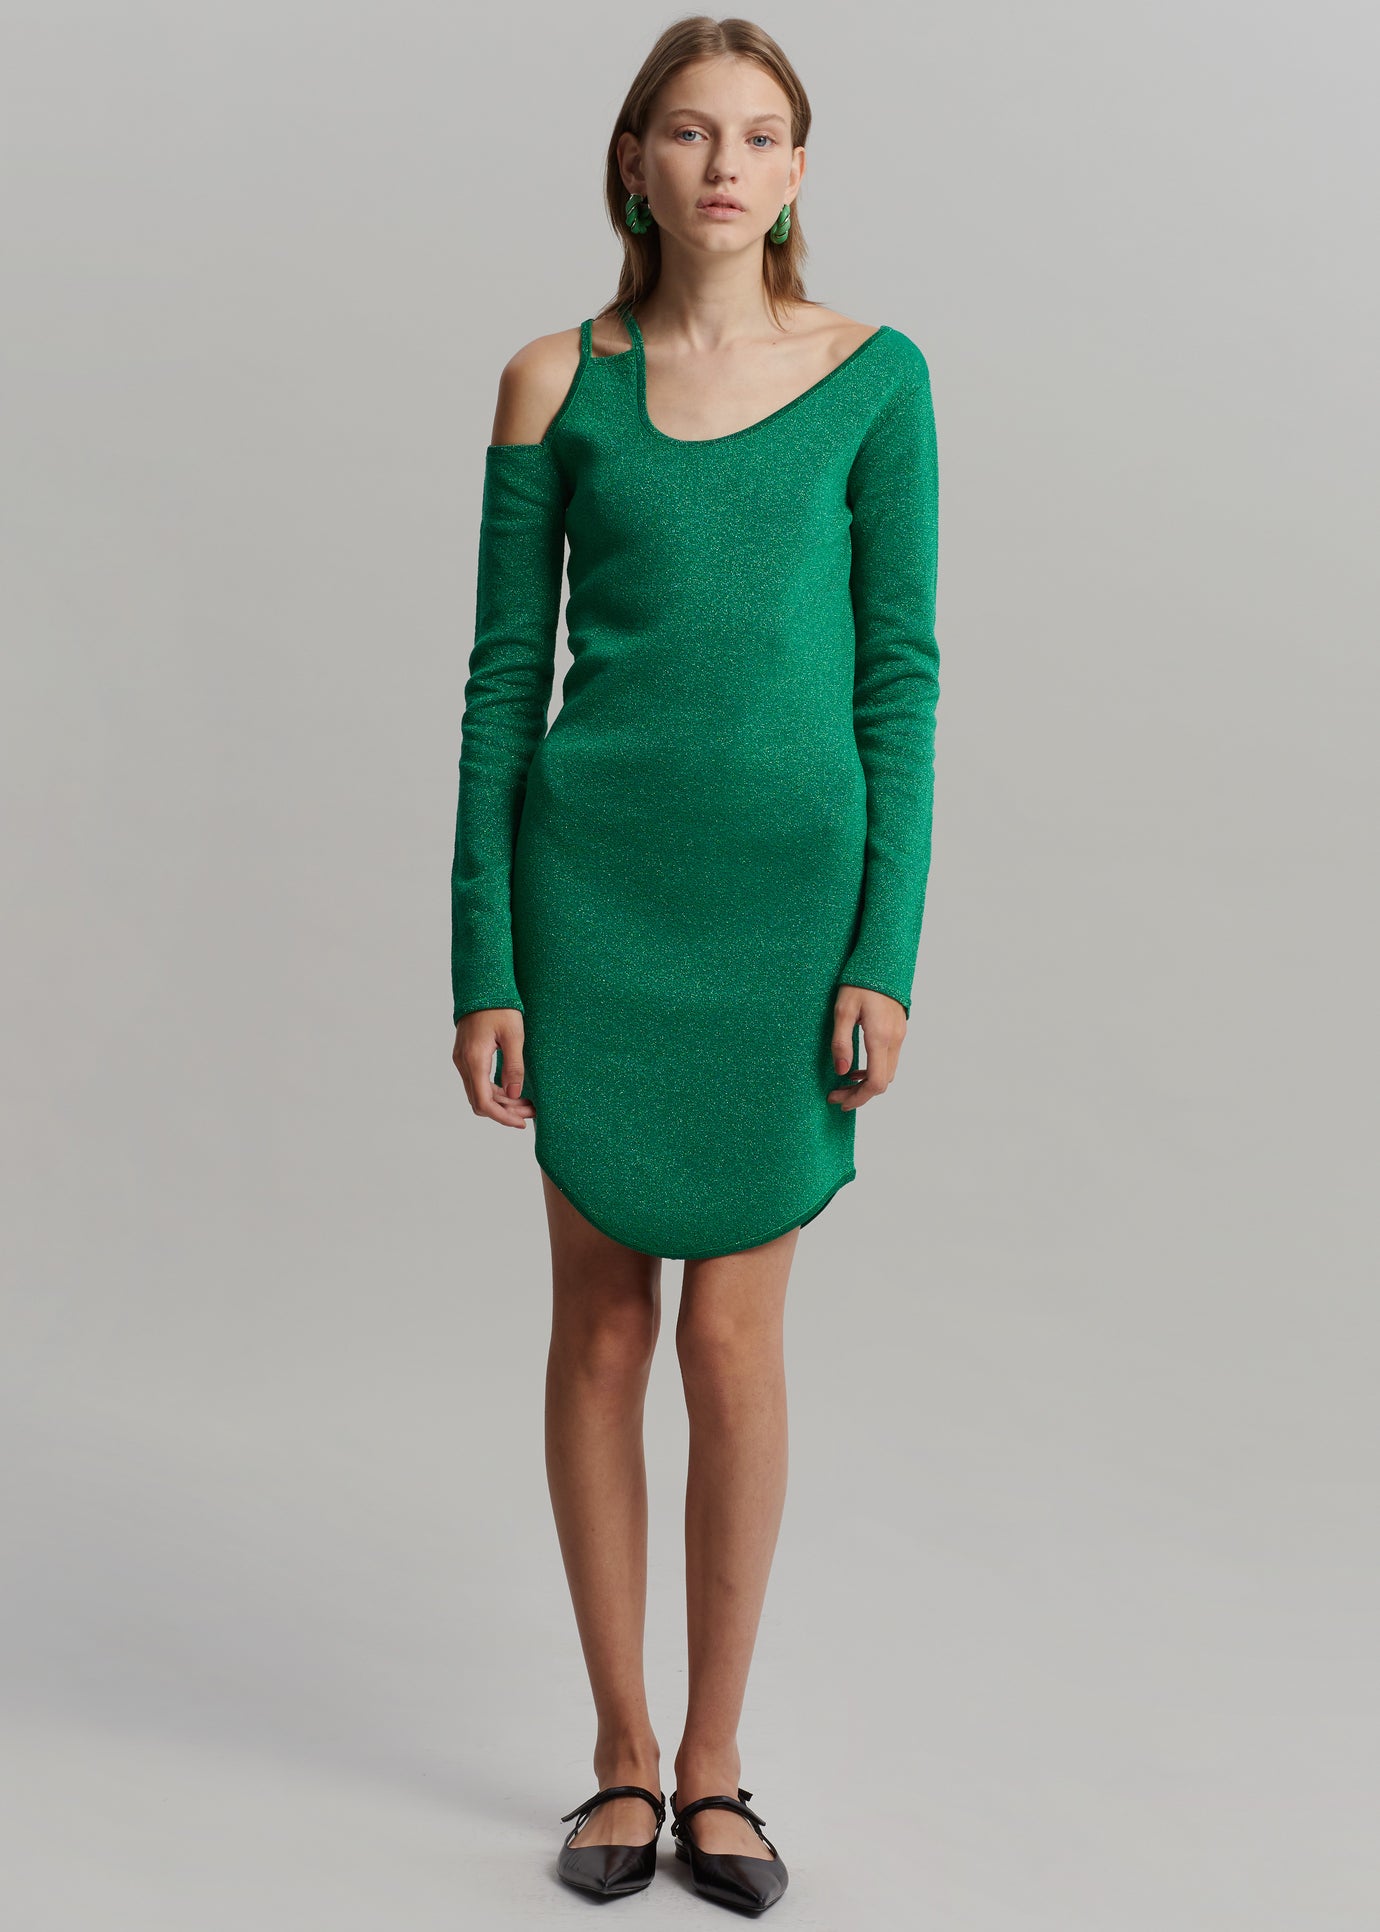 JW Anderson Cut Out Detail Asymmetric Dress - Emerald